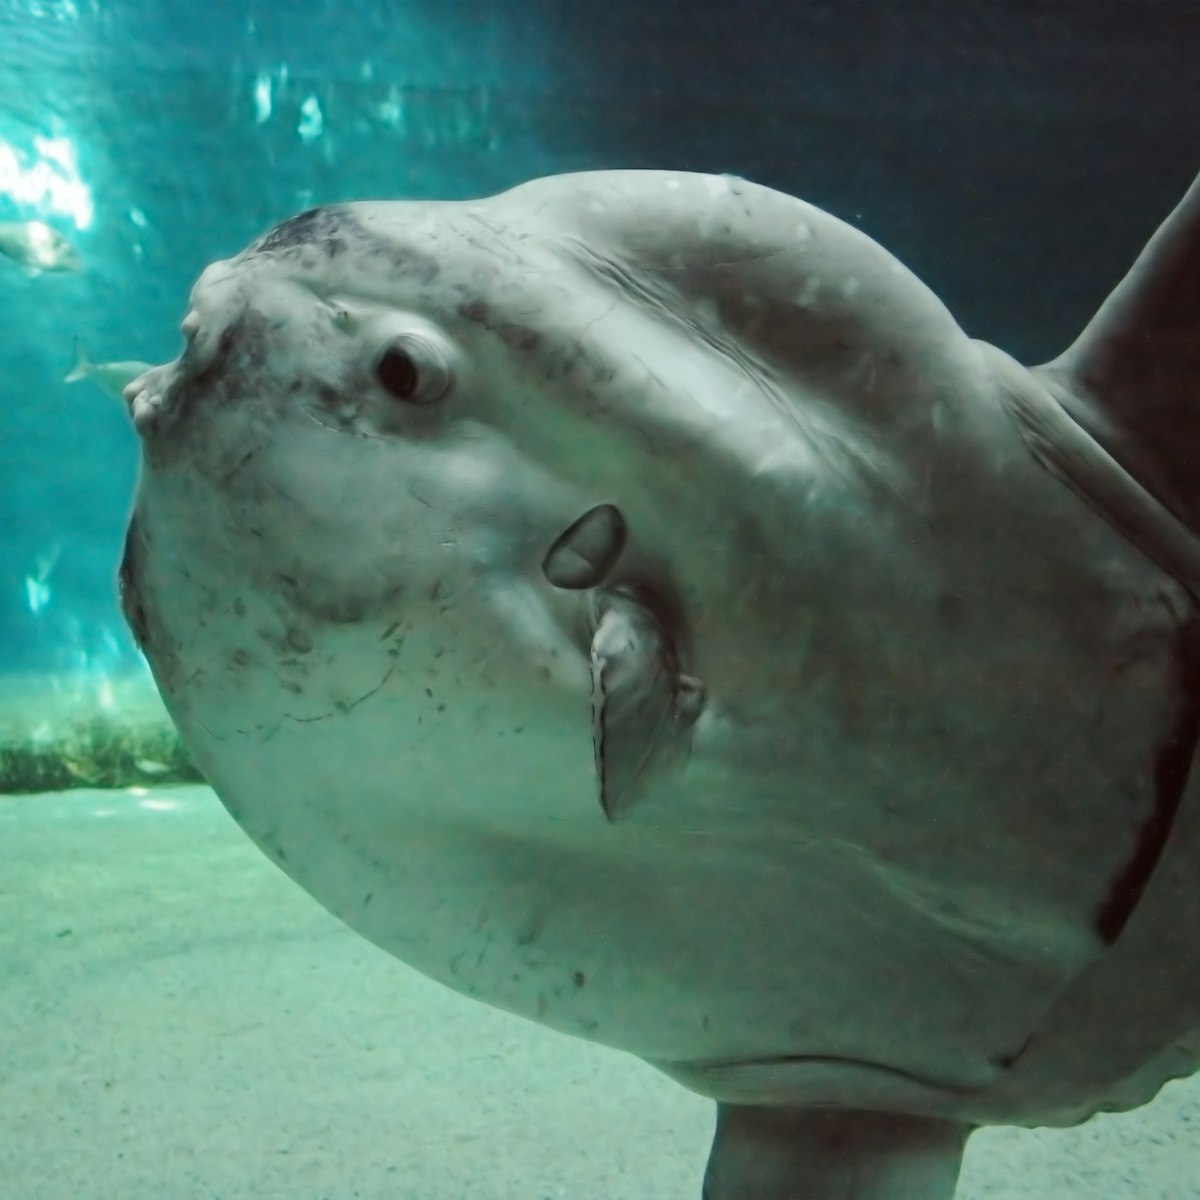 Huge luna-fish (mola-mola or ocean sunfish) in dark underwater environment.; Shutterstock ID 10937248